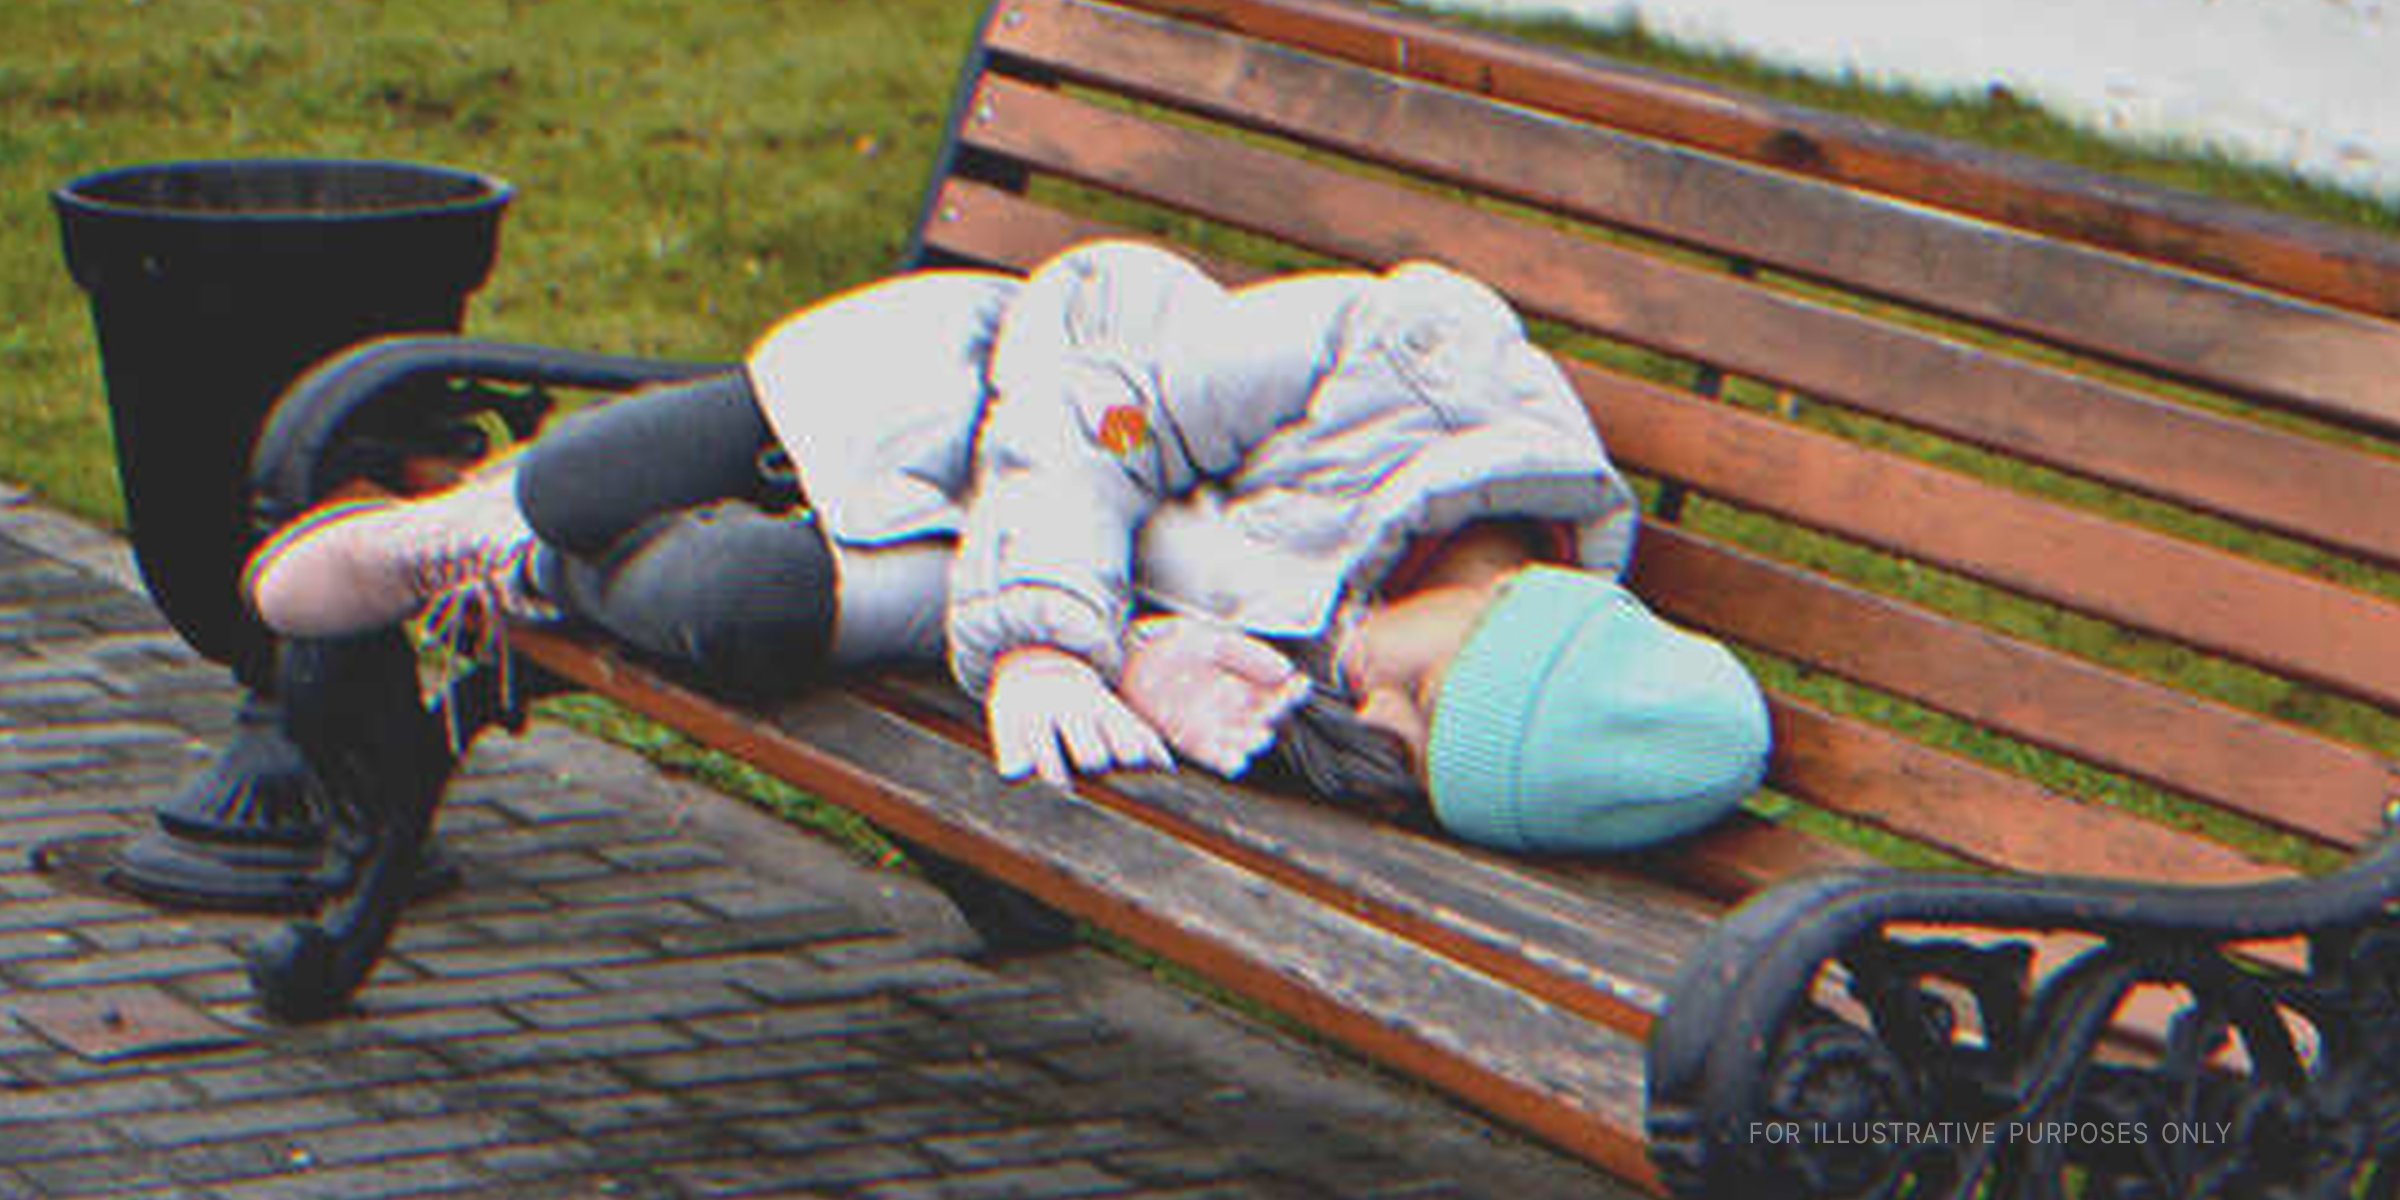 Child sleeping on a park bench | Shutterstock.com